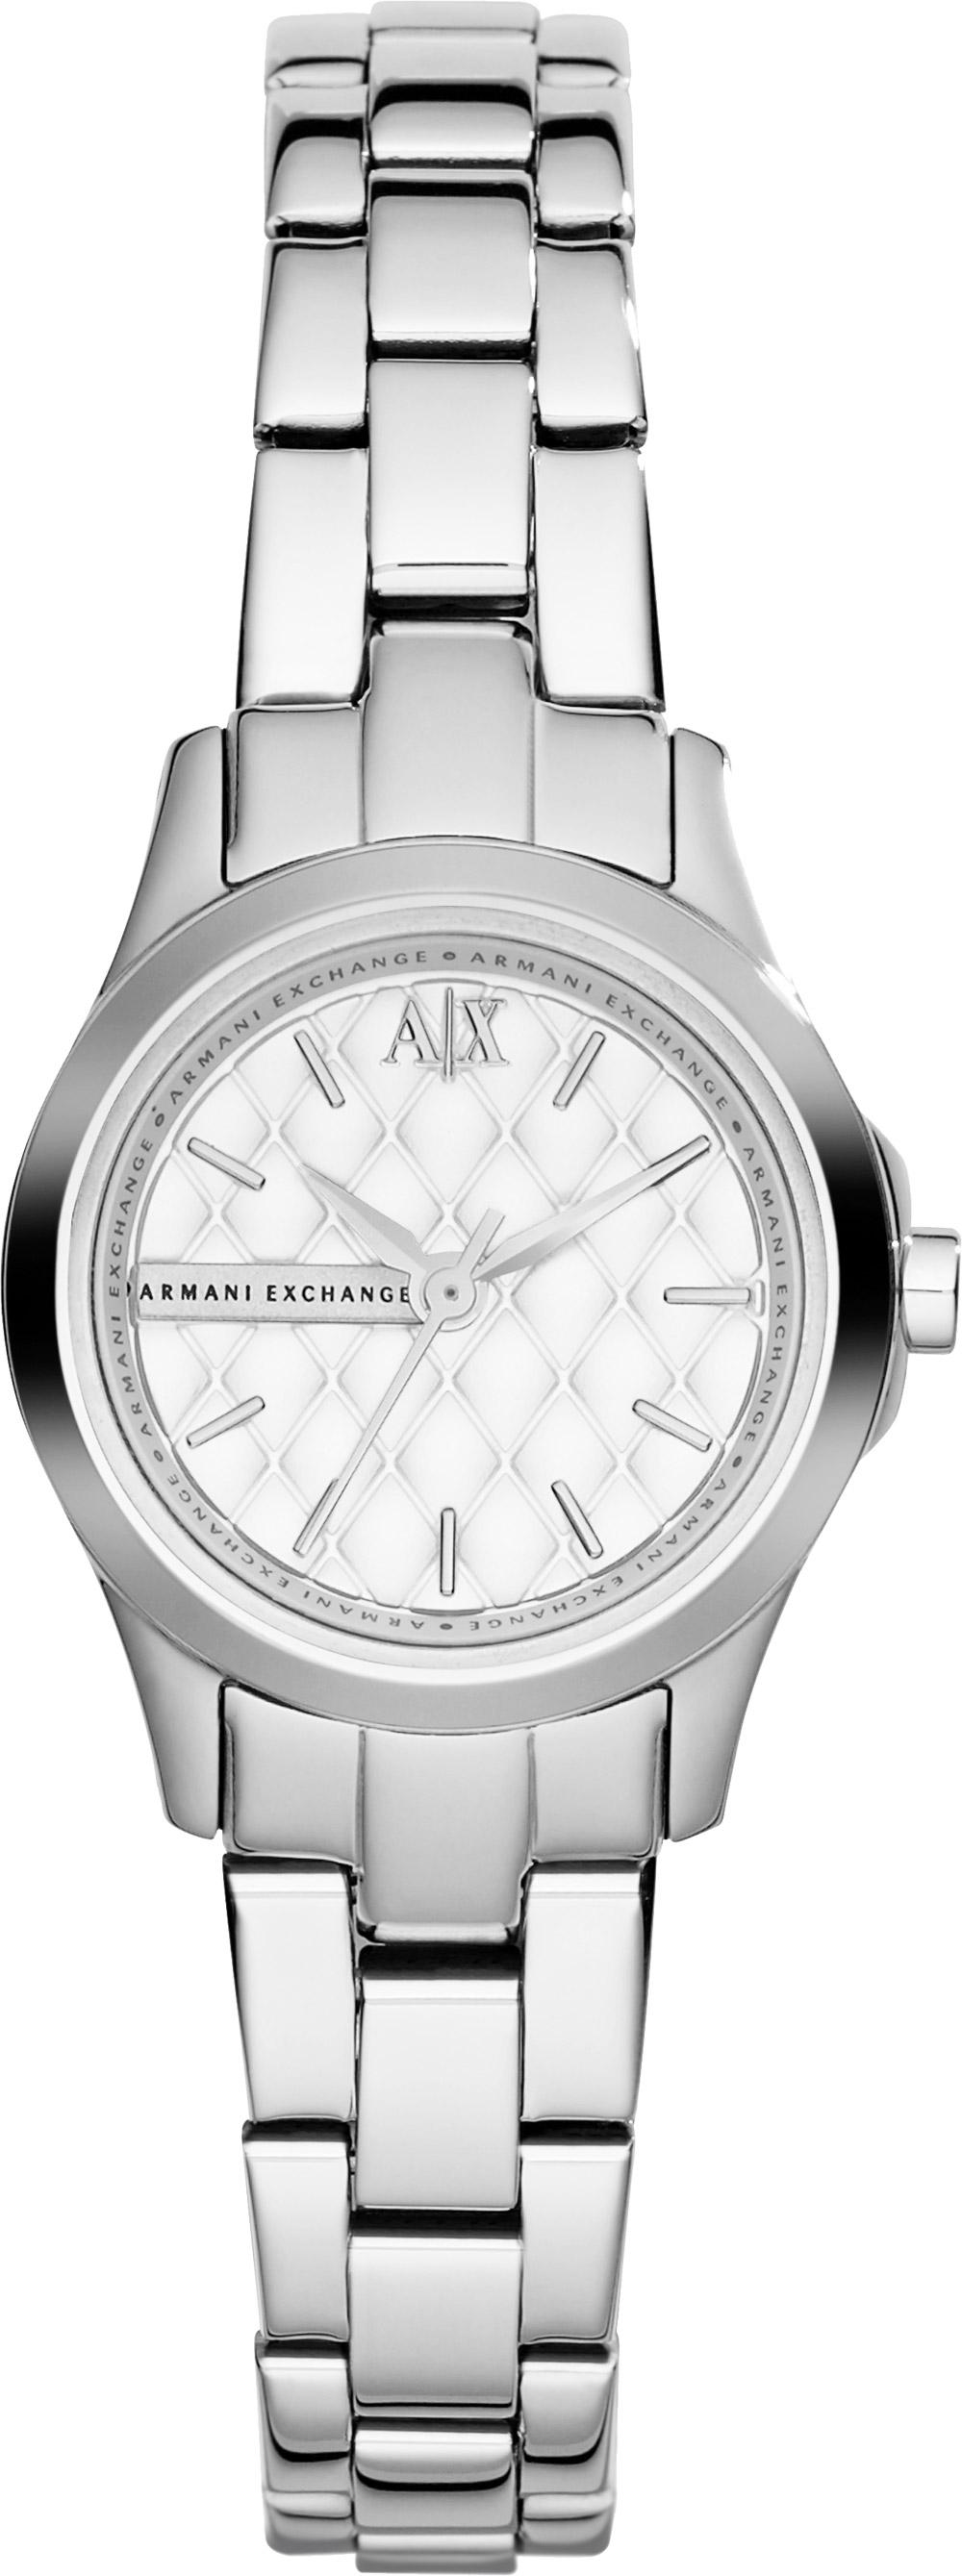 Foto Armani Exchange Reloj de la mujer AX5211